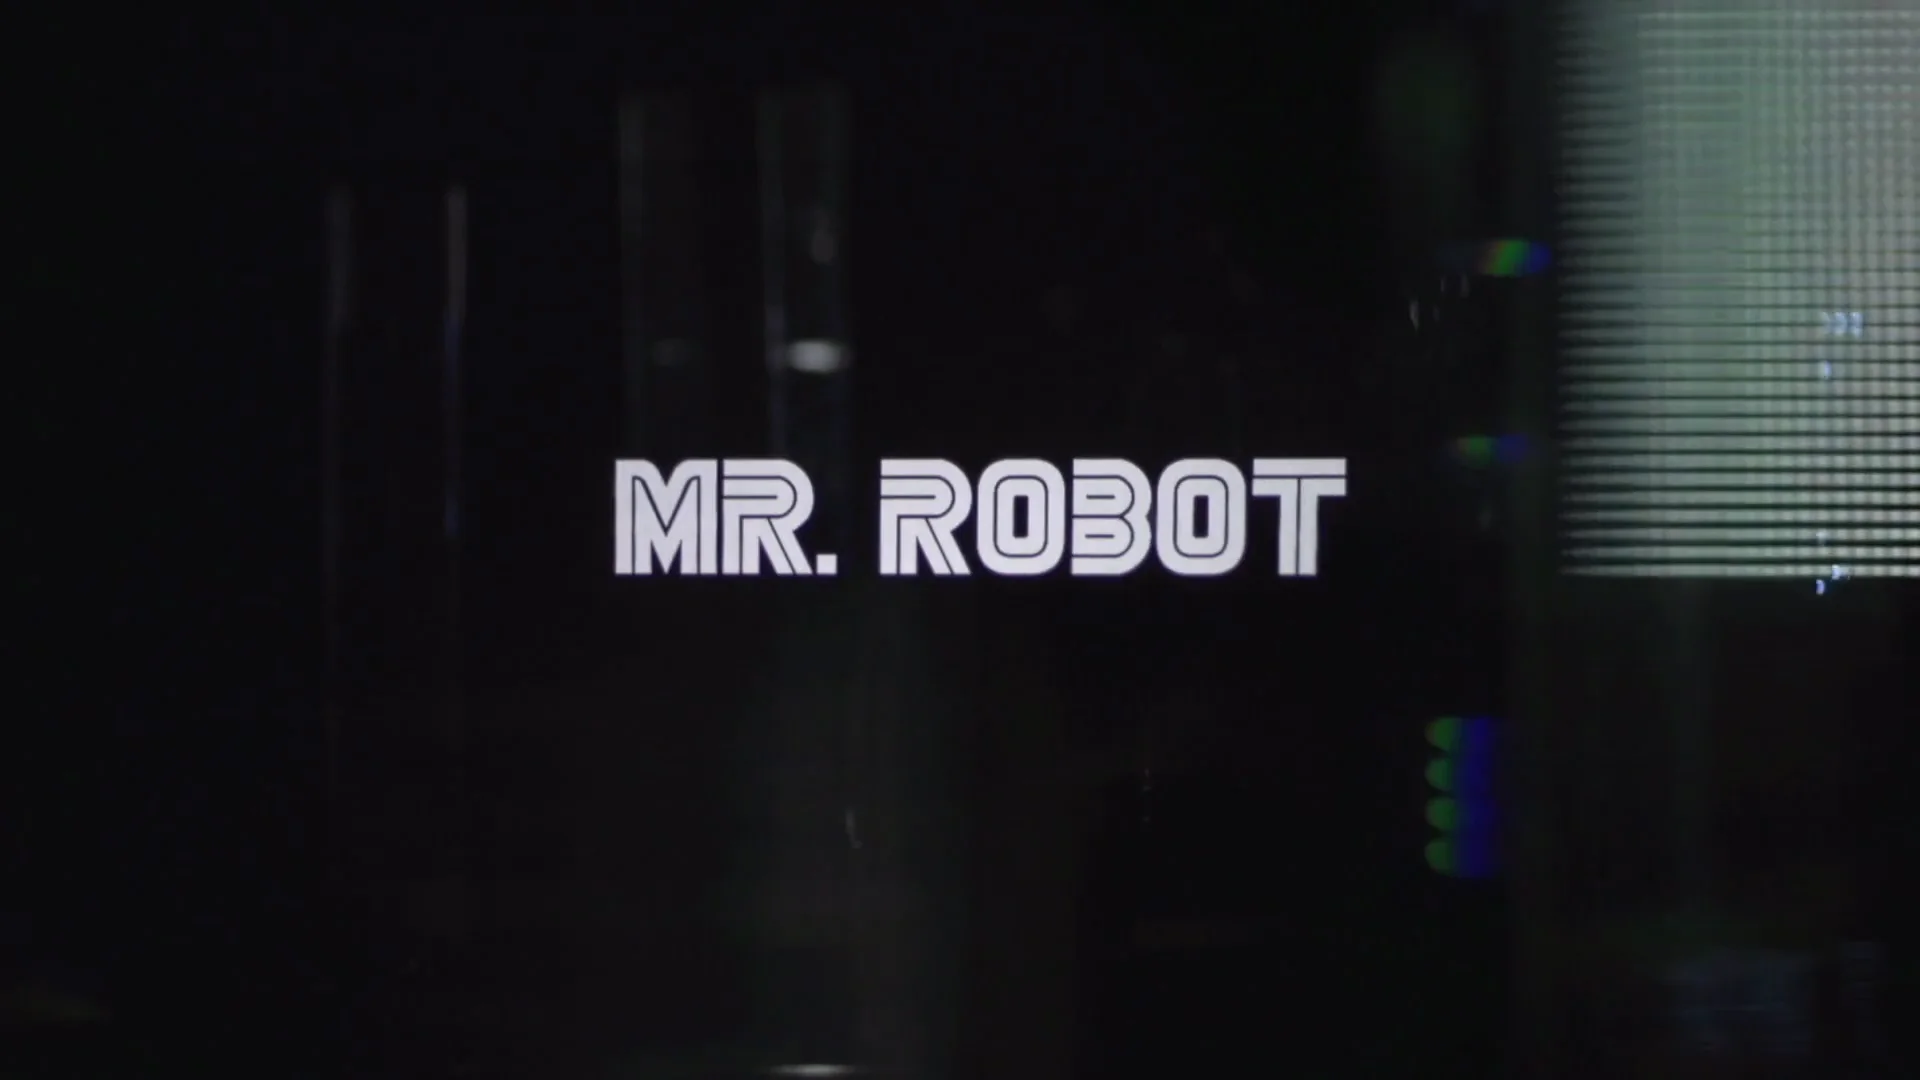 Mr. Robot Show Titles Compilation on Vimeo